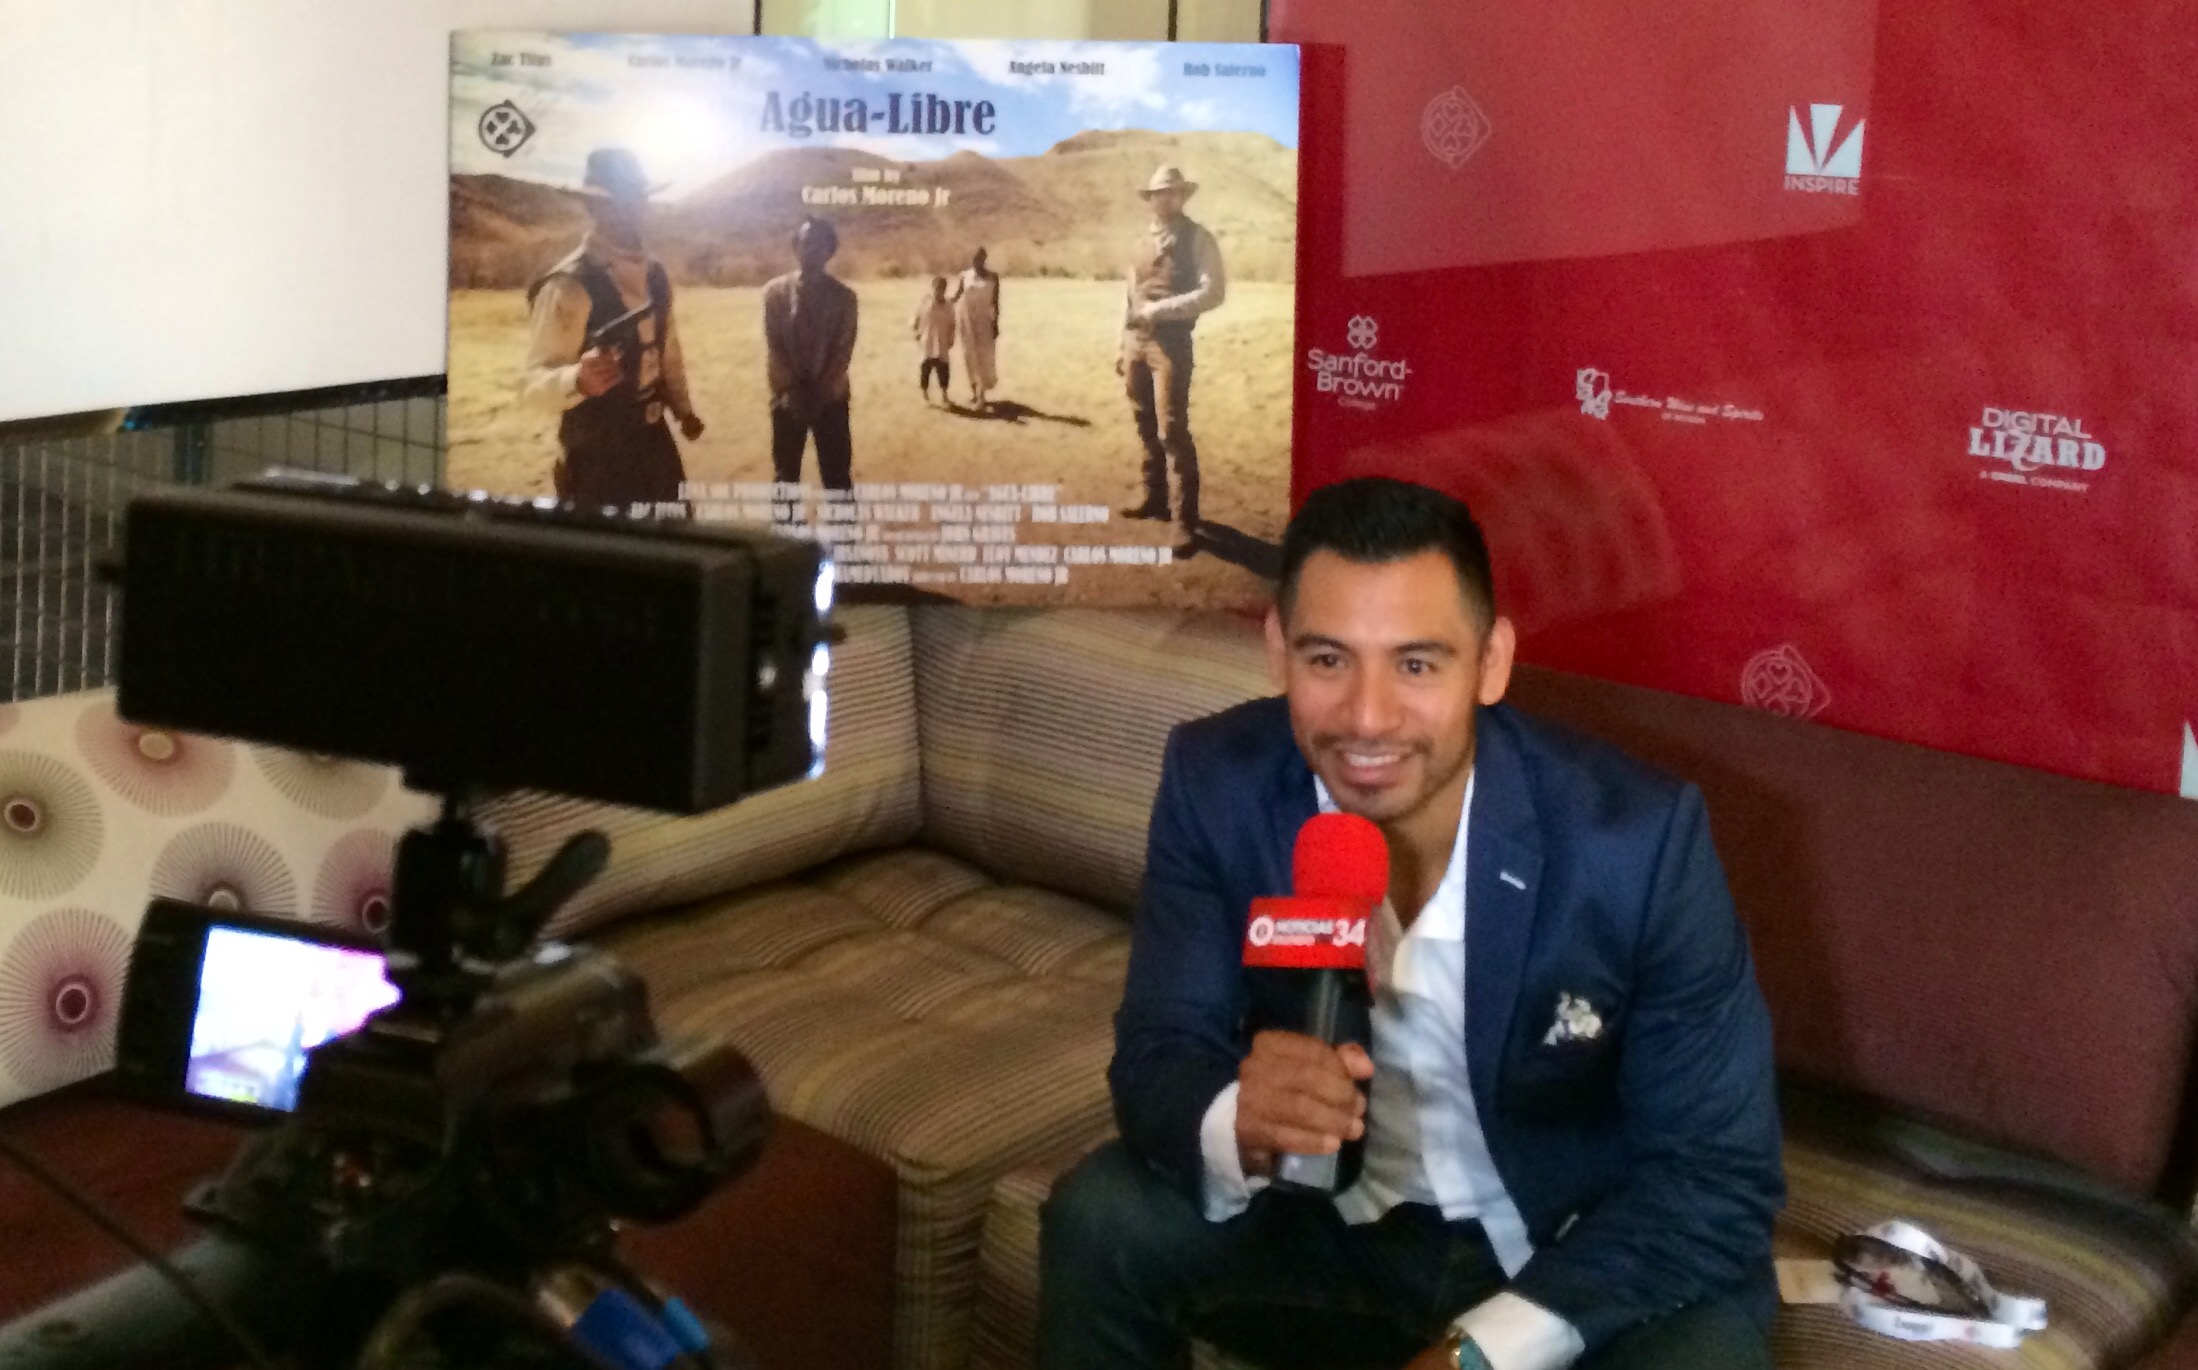 Actor Eloy Mendez doing press at the 2014 Las Vegas Int. Film Festival.